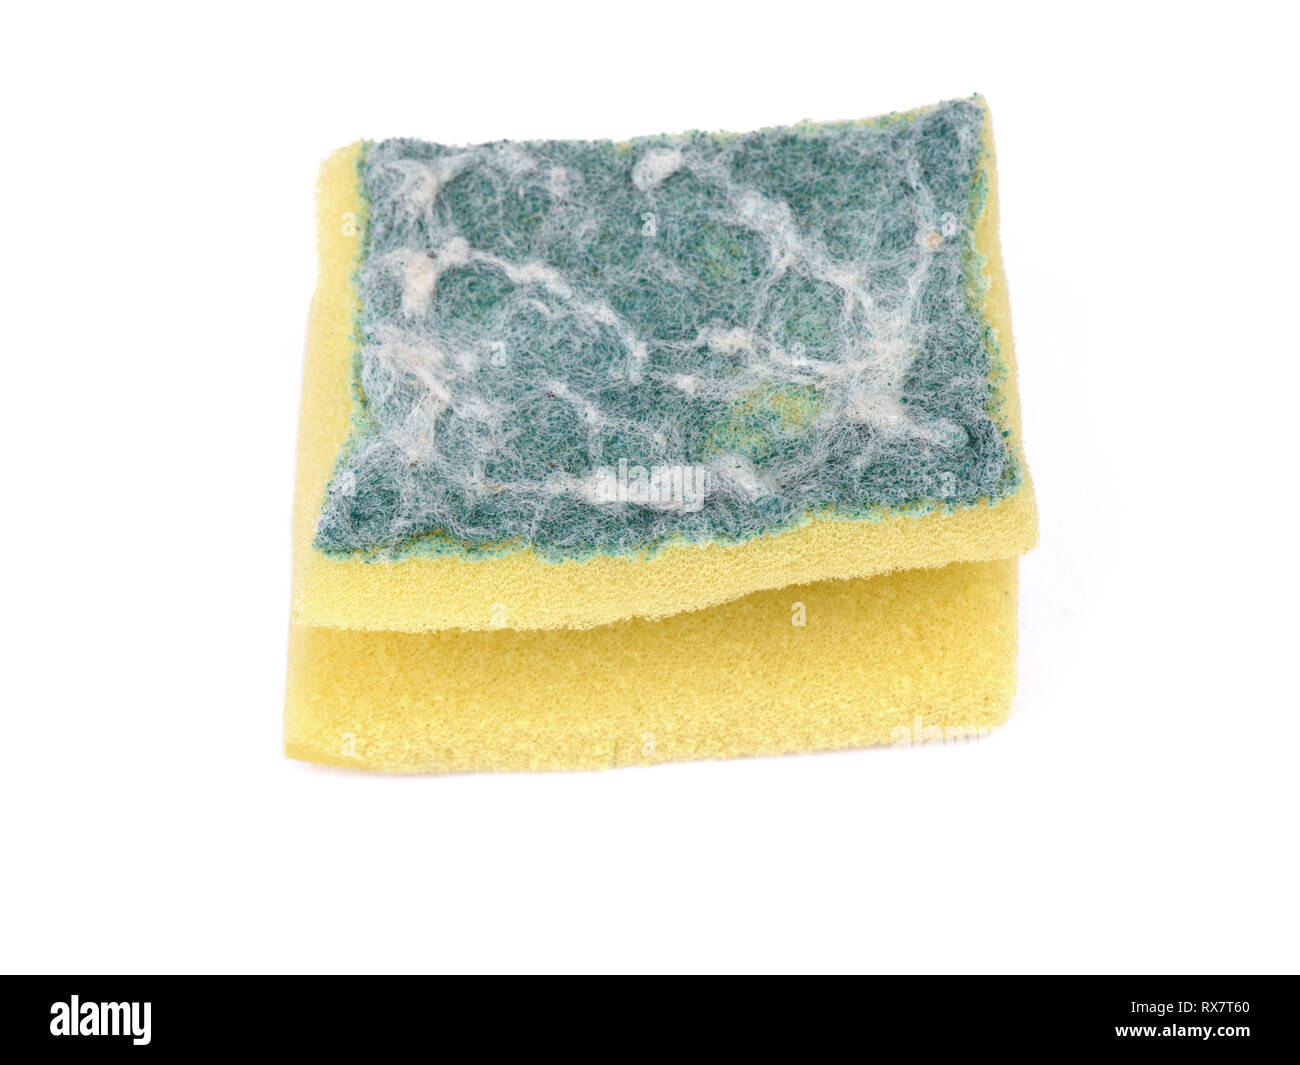 Sponge Old Sponge Wash Dish Washing Sponge Absorbent Yellow Sponges  Cleaning Isolated On White Background Yellow Sponge Texture Stock Photo -  Download Image Now - iStock